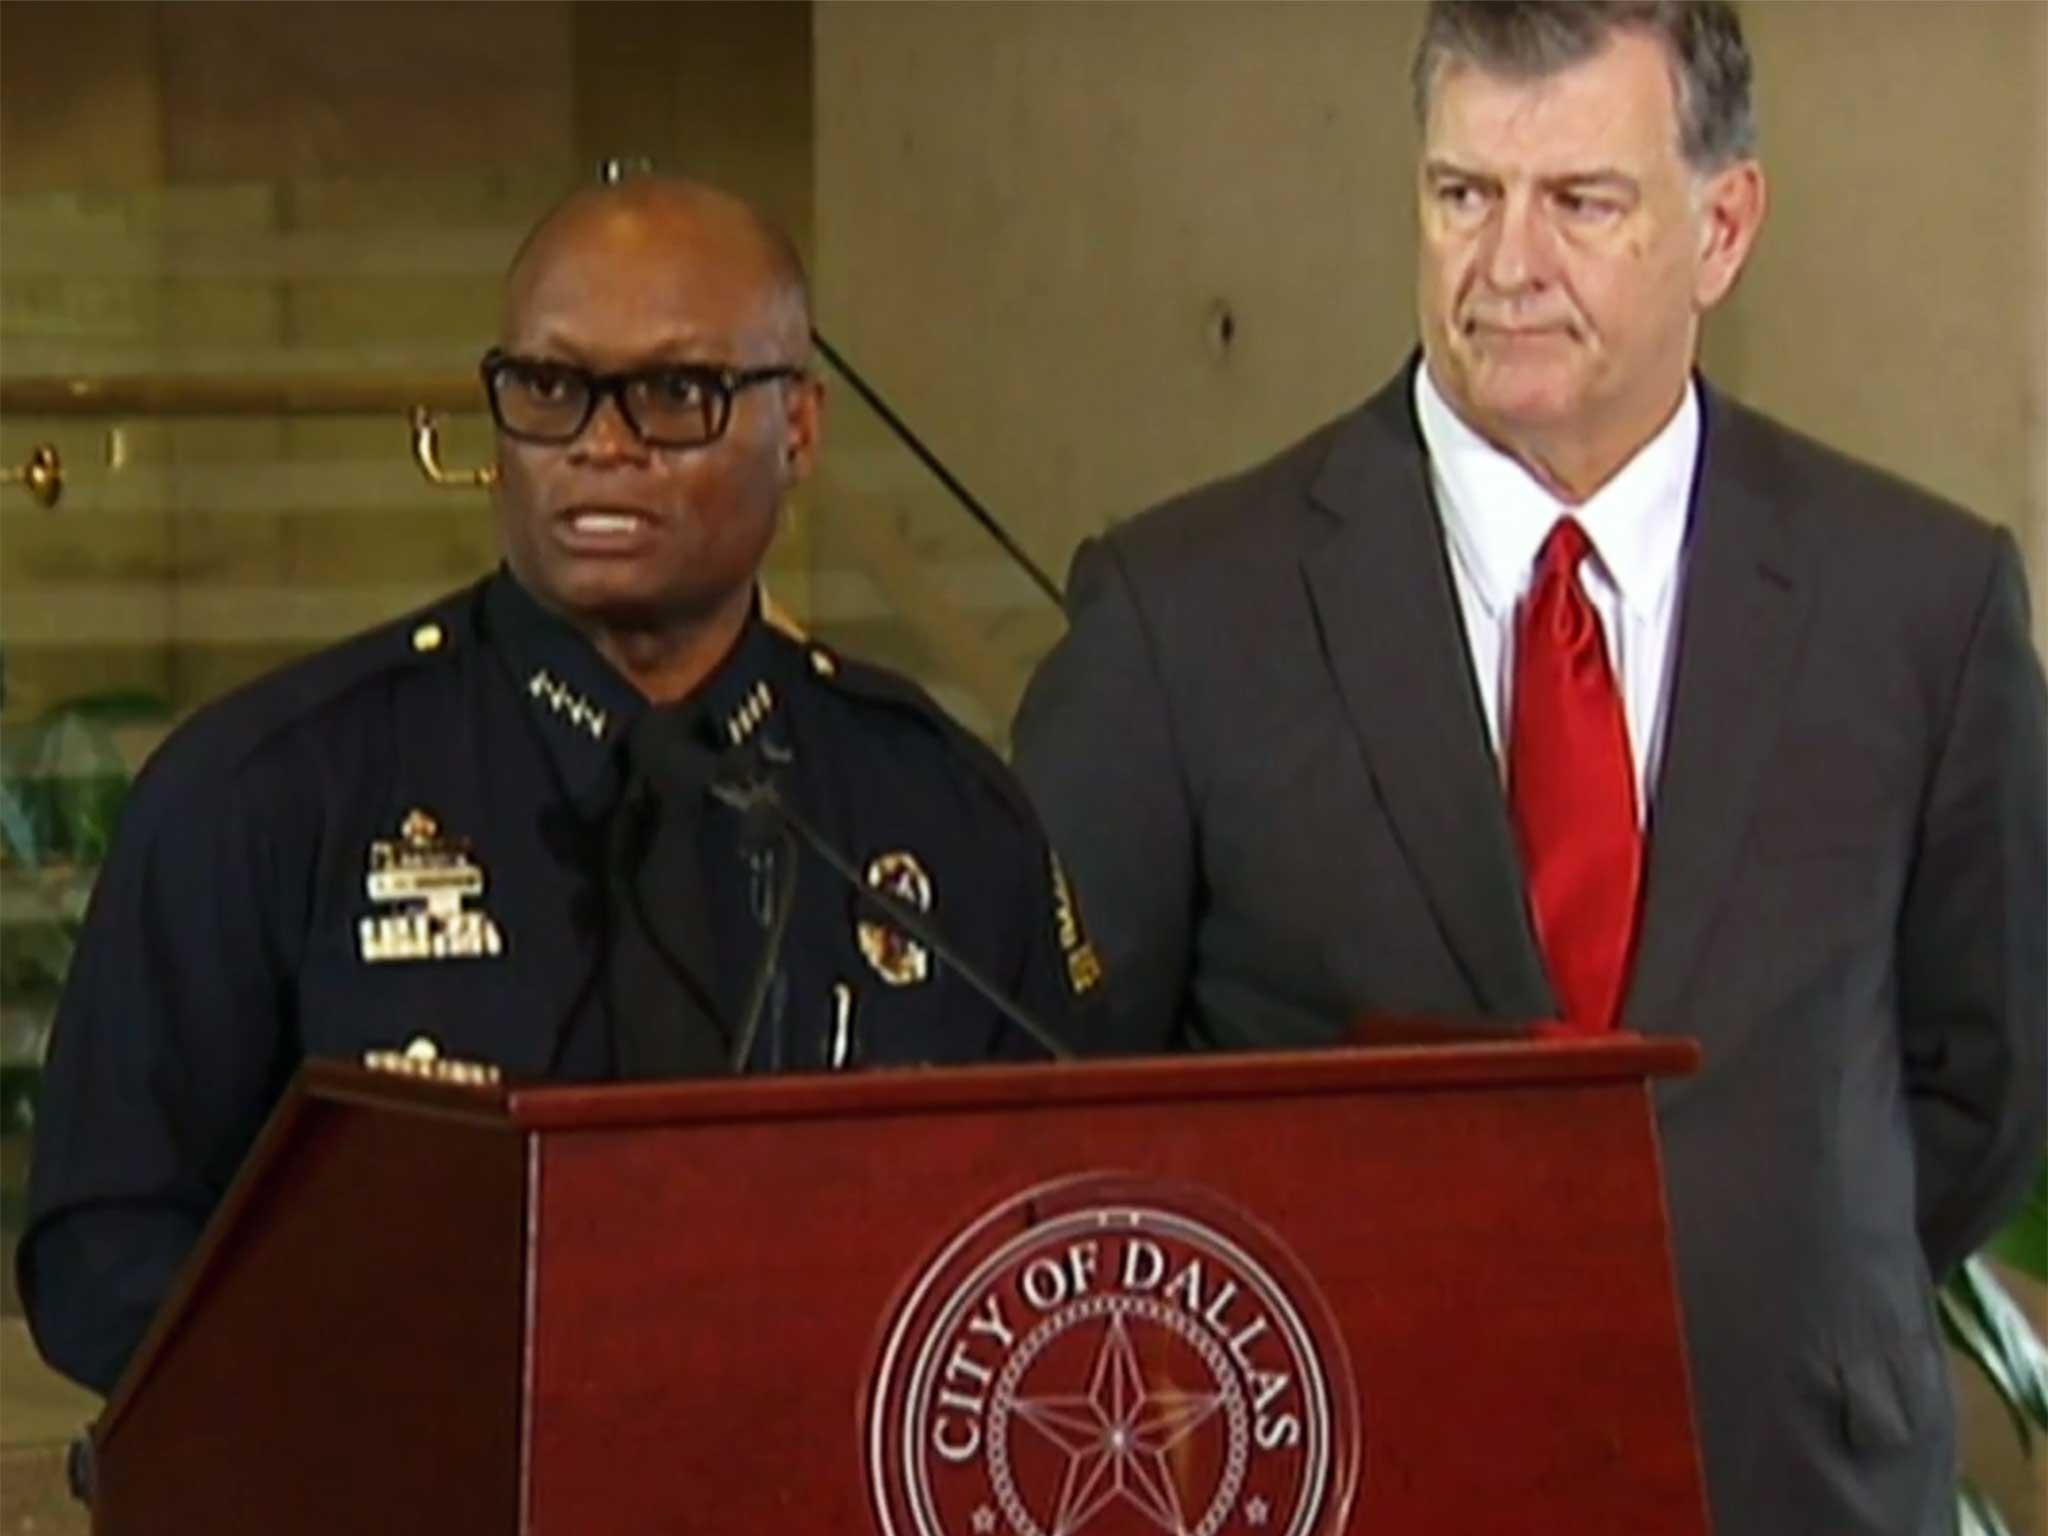 Dallas Police Chief David Brown and city mayor Mike Rawlings at a press conference this morning